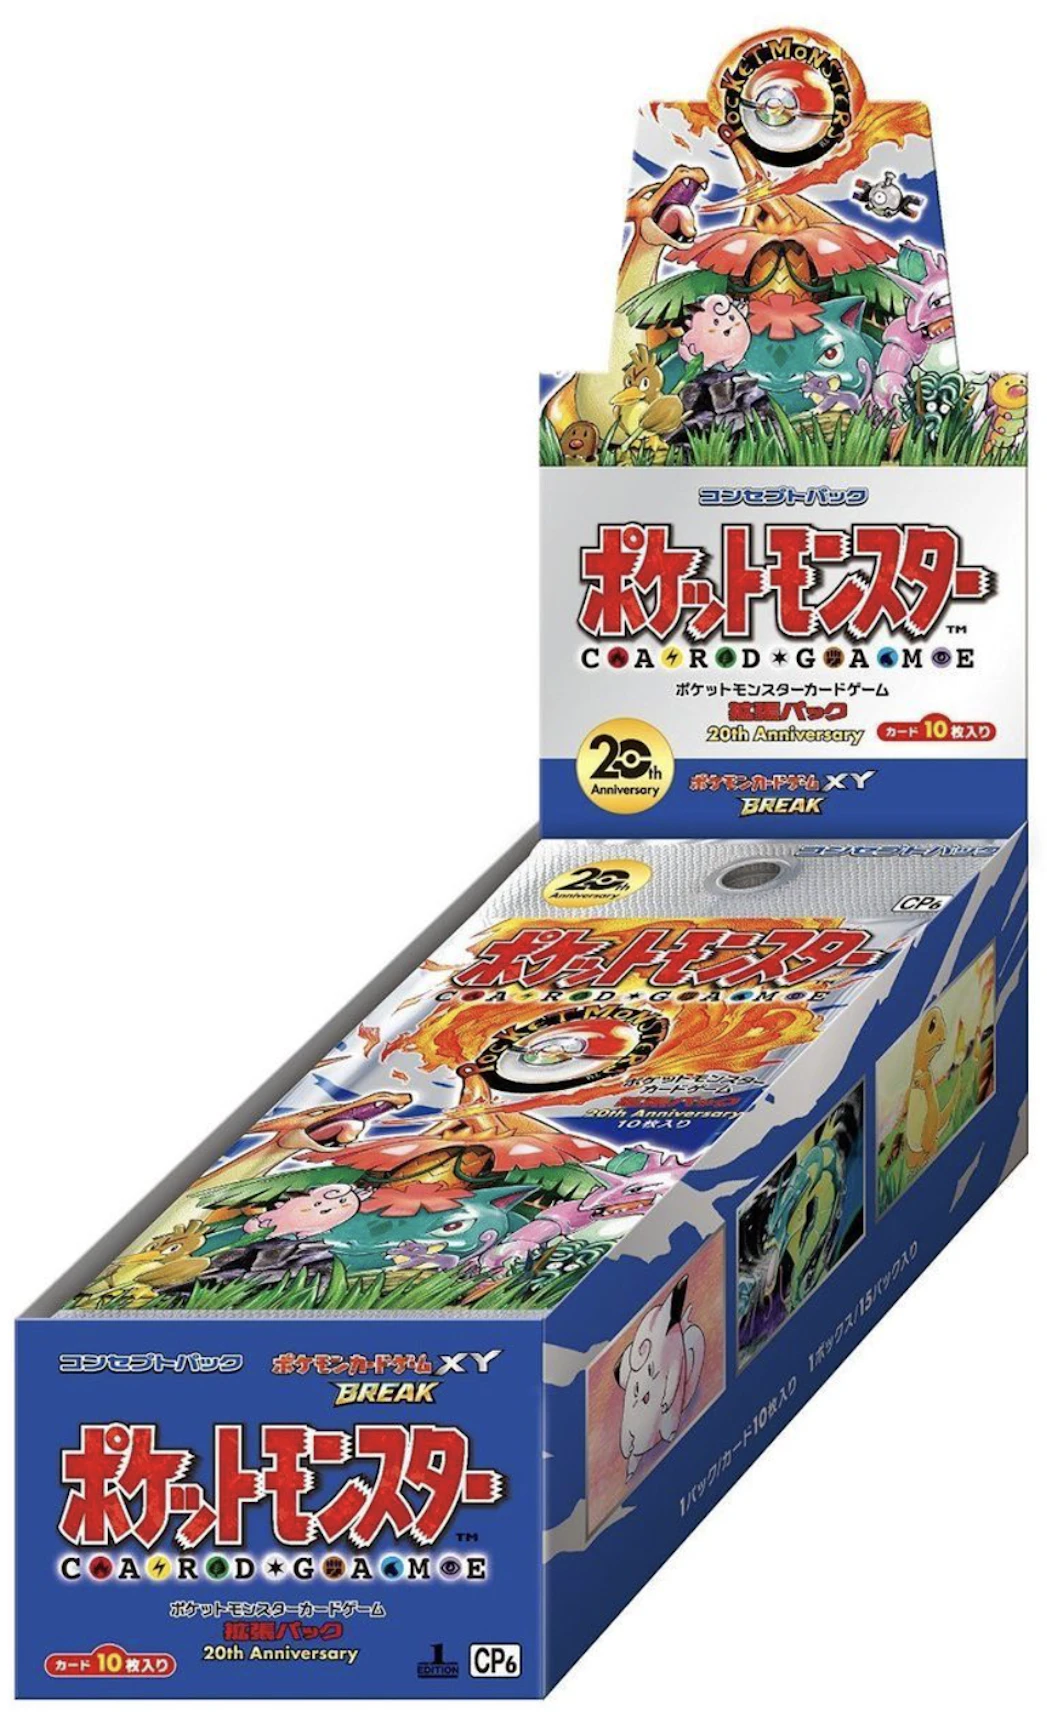 Pokémon TCG 20th Anniversary Box (Japanese) - US